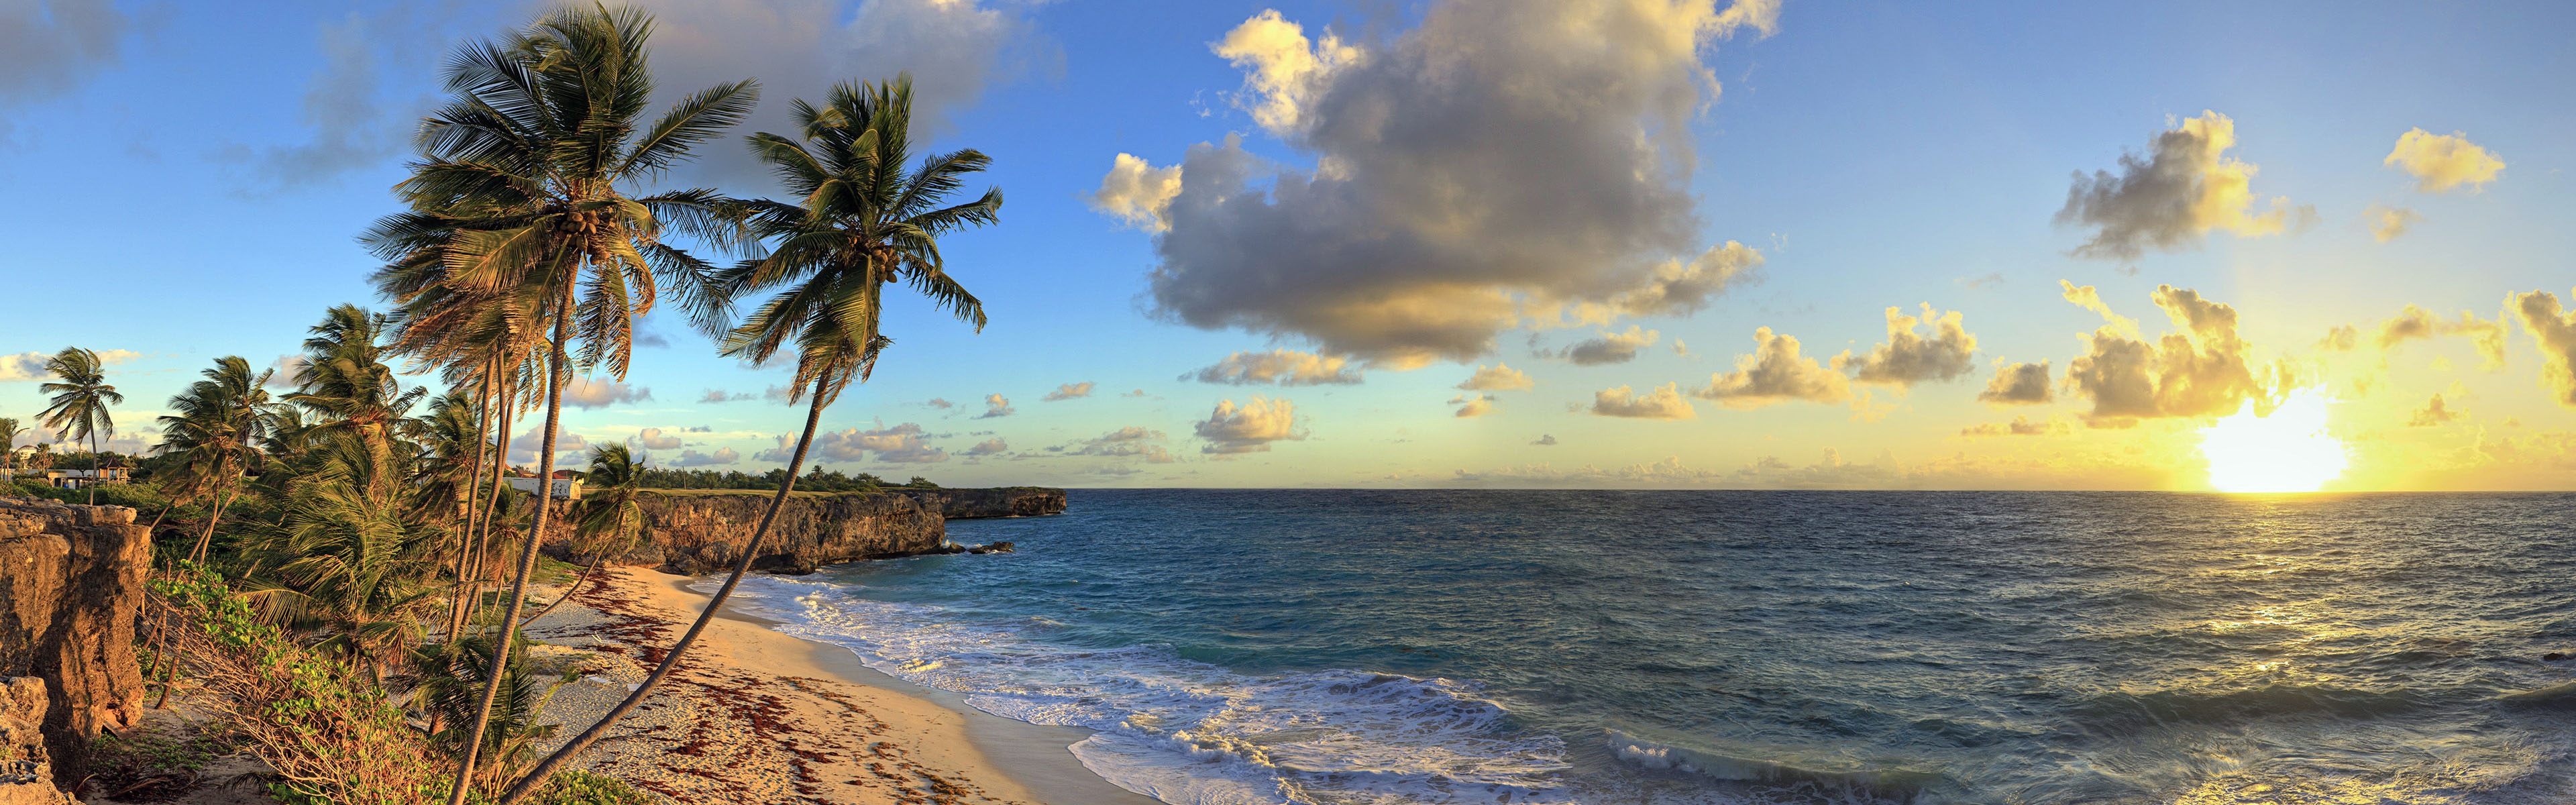 Krásná pláž západ slunce, Windows 8 panoramatické, širokoúhlé tapety #6 - 3840x1200